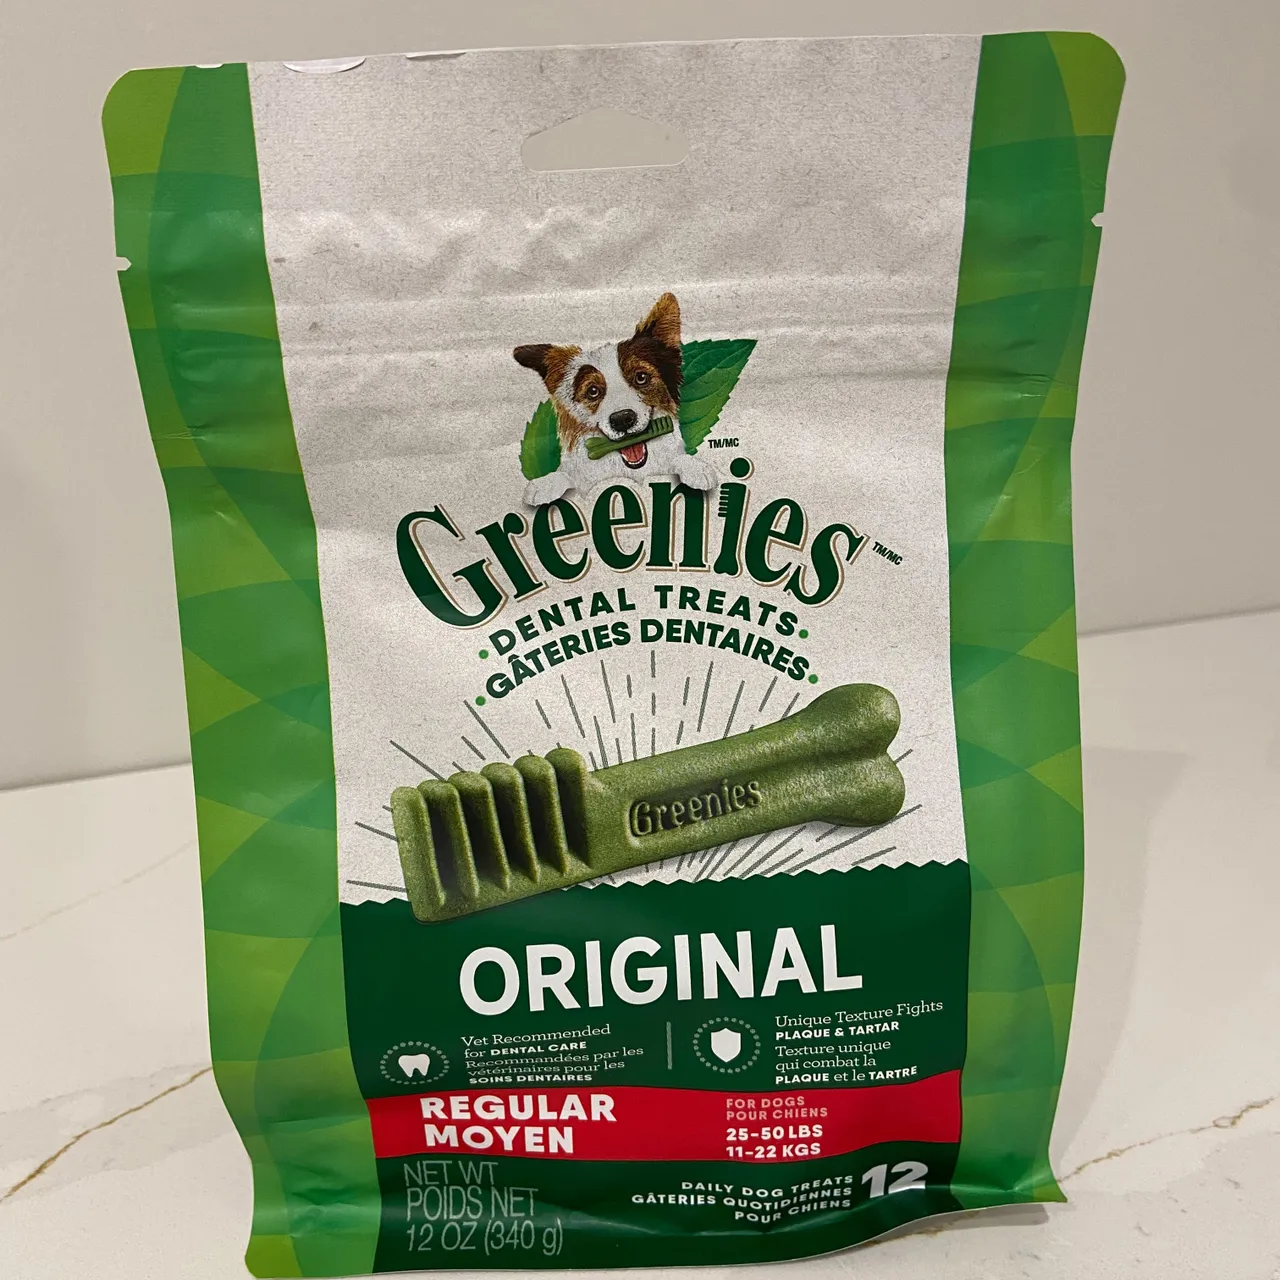 Greenies dental treats for dogs photo 1